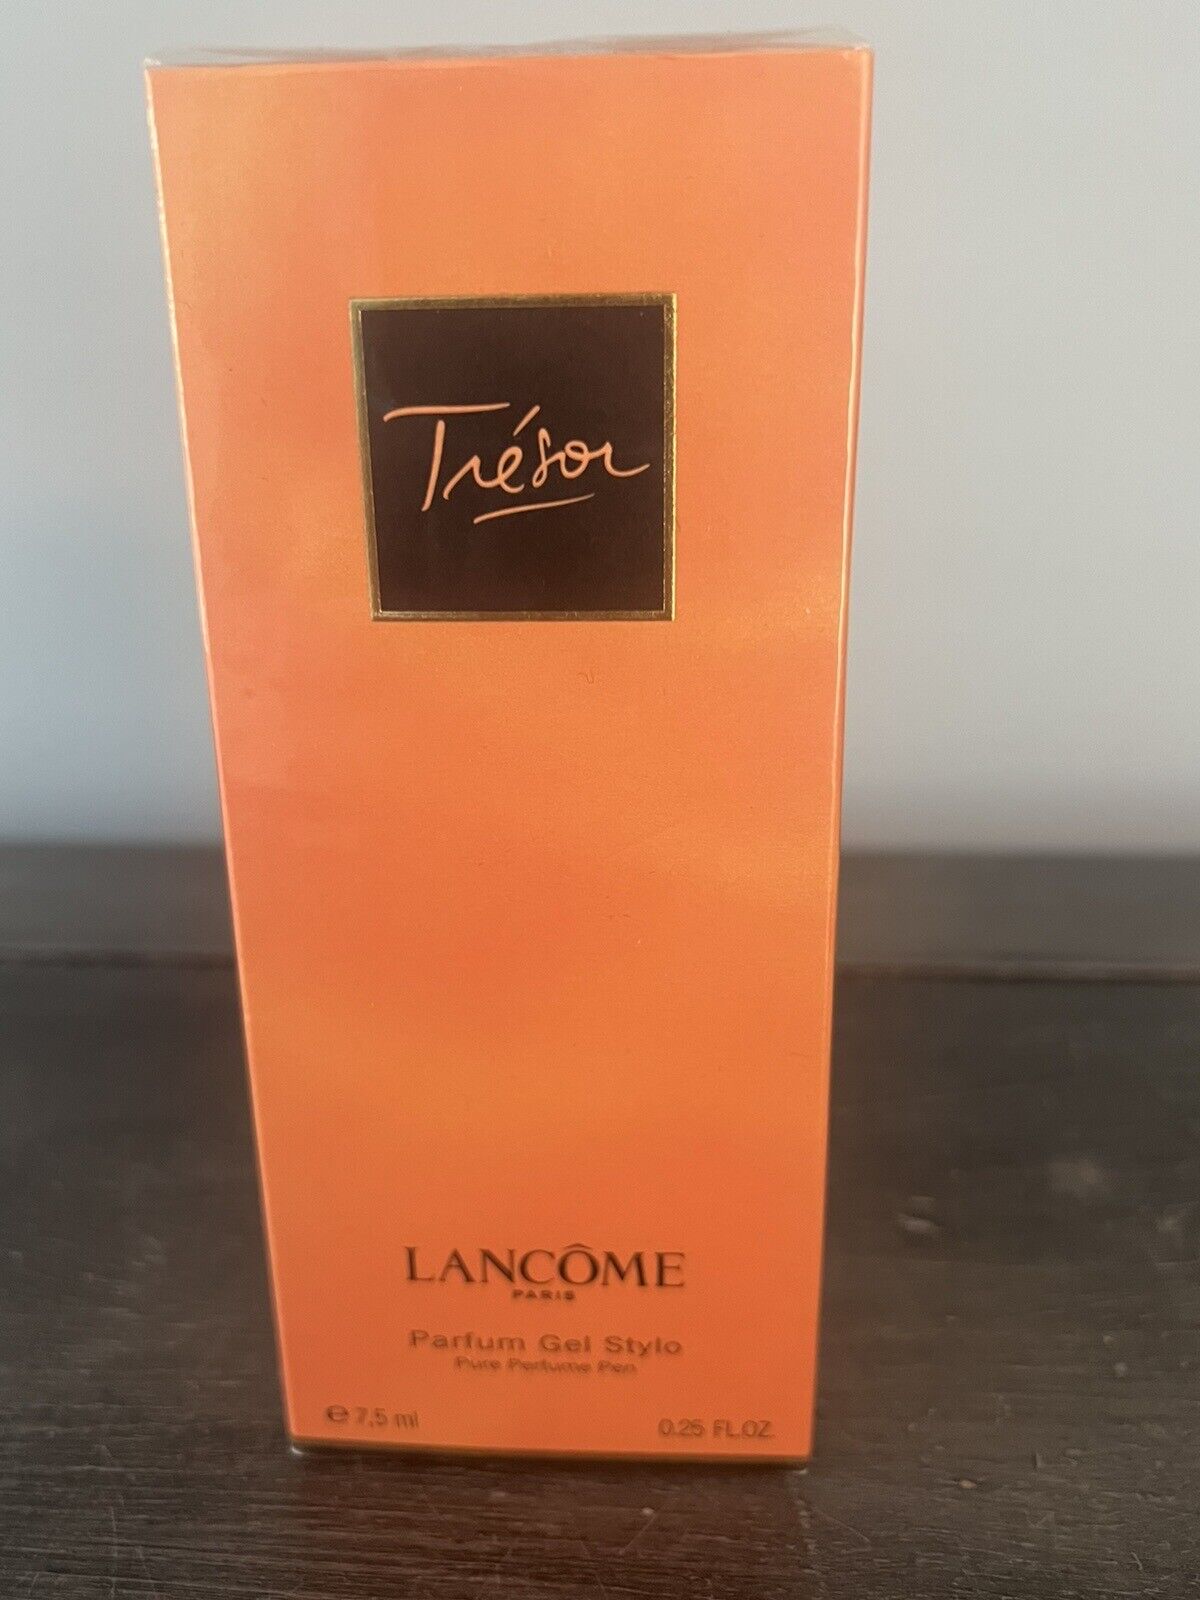 Tresor Parfum Gel Stylo Pure Perfume Pen 7.5 ml / 0.25oz Perfume by Lancome New